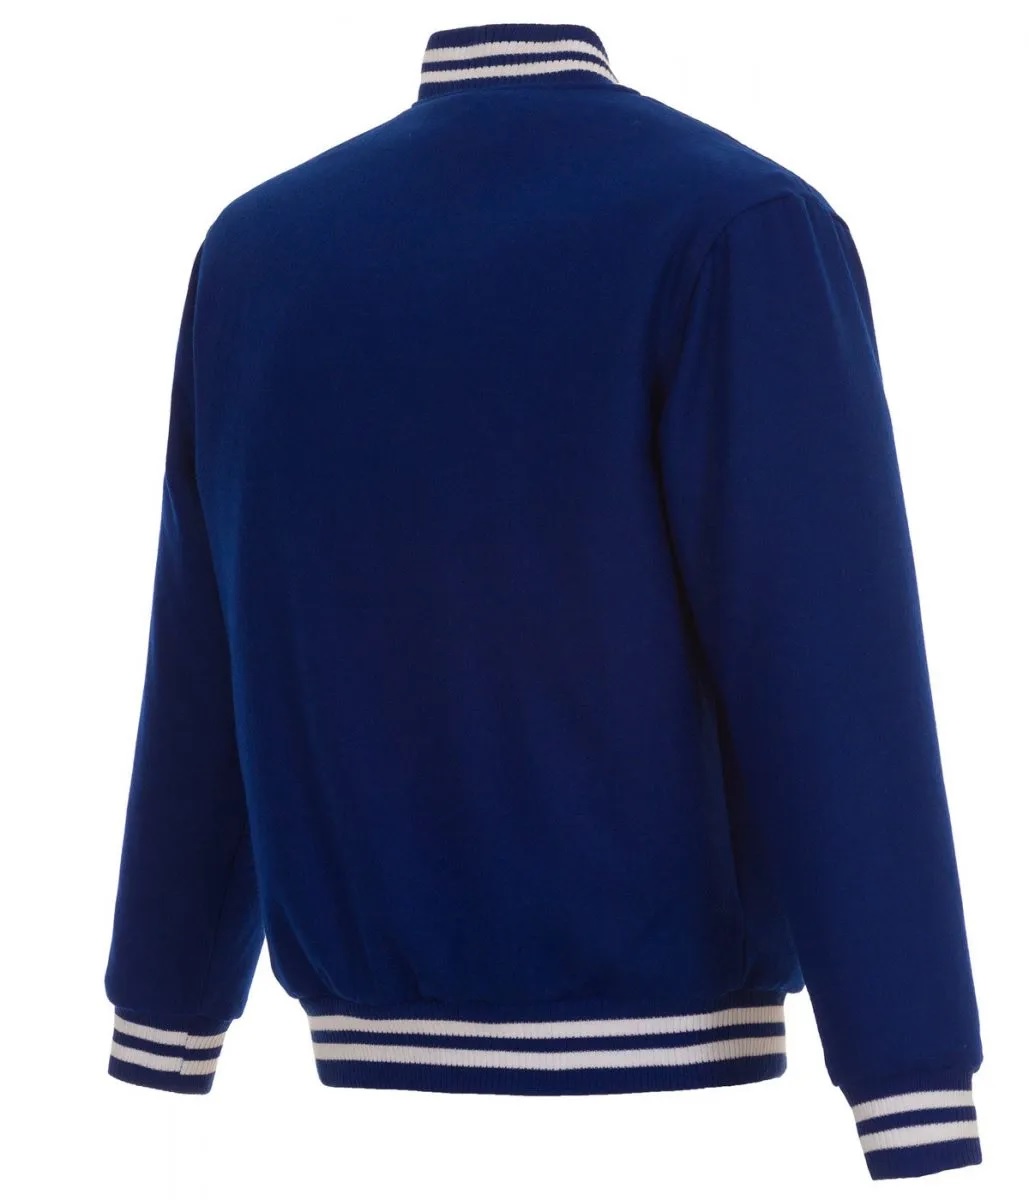 Varsity Philadelphia 76ers Royal Blue Wool Jacket